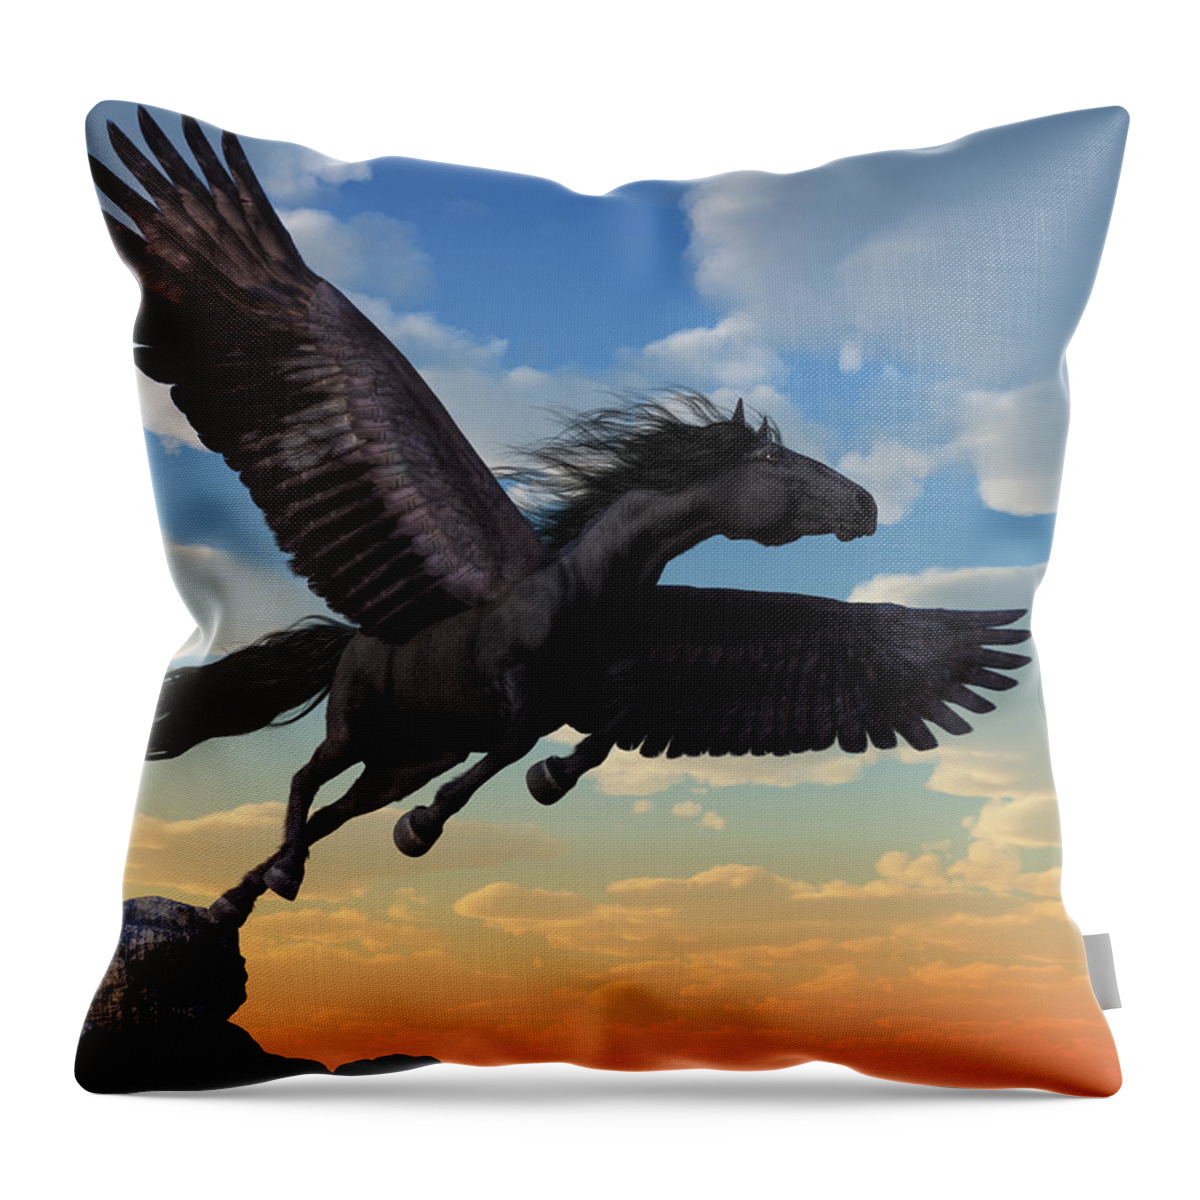 Black Pegasus Throw Pillow featuring the digital art Friesian Pegasus by Daniel Eskridge